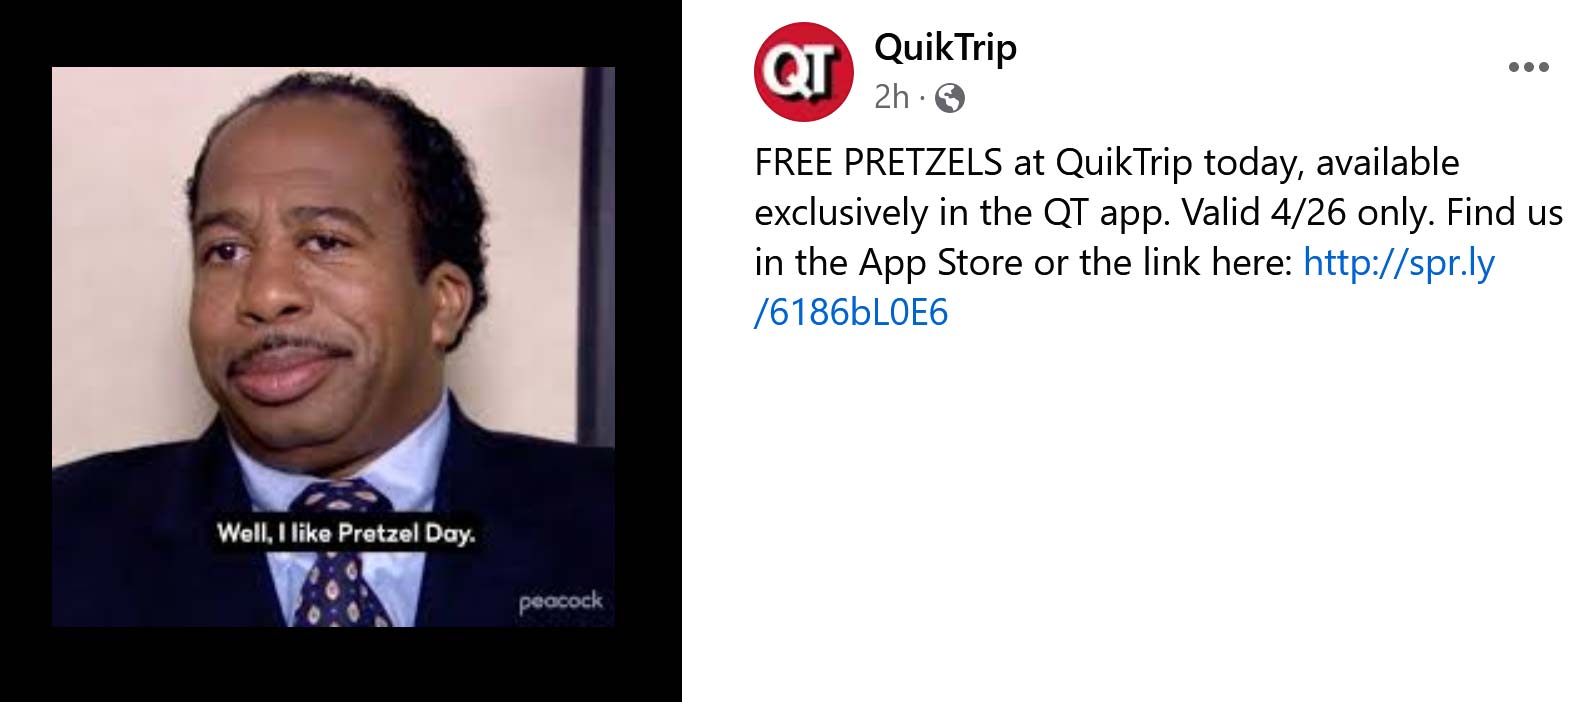 QuikTrip restaurants Coupon  Free pretzel today via mobile at QuikTrip gas stations #quiktrip 